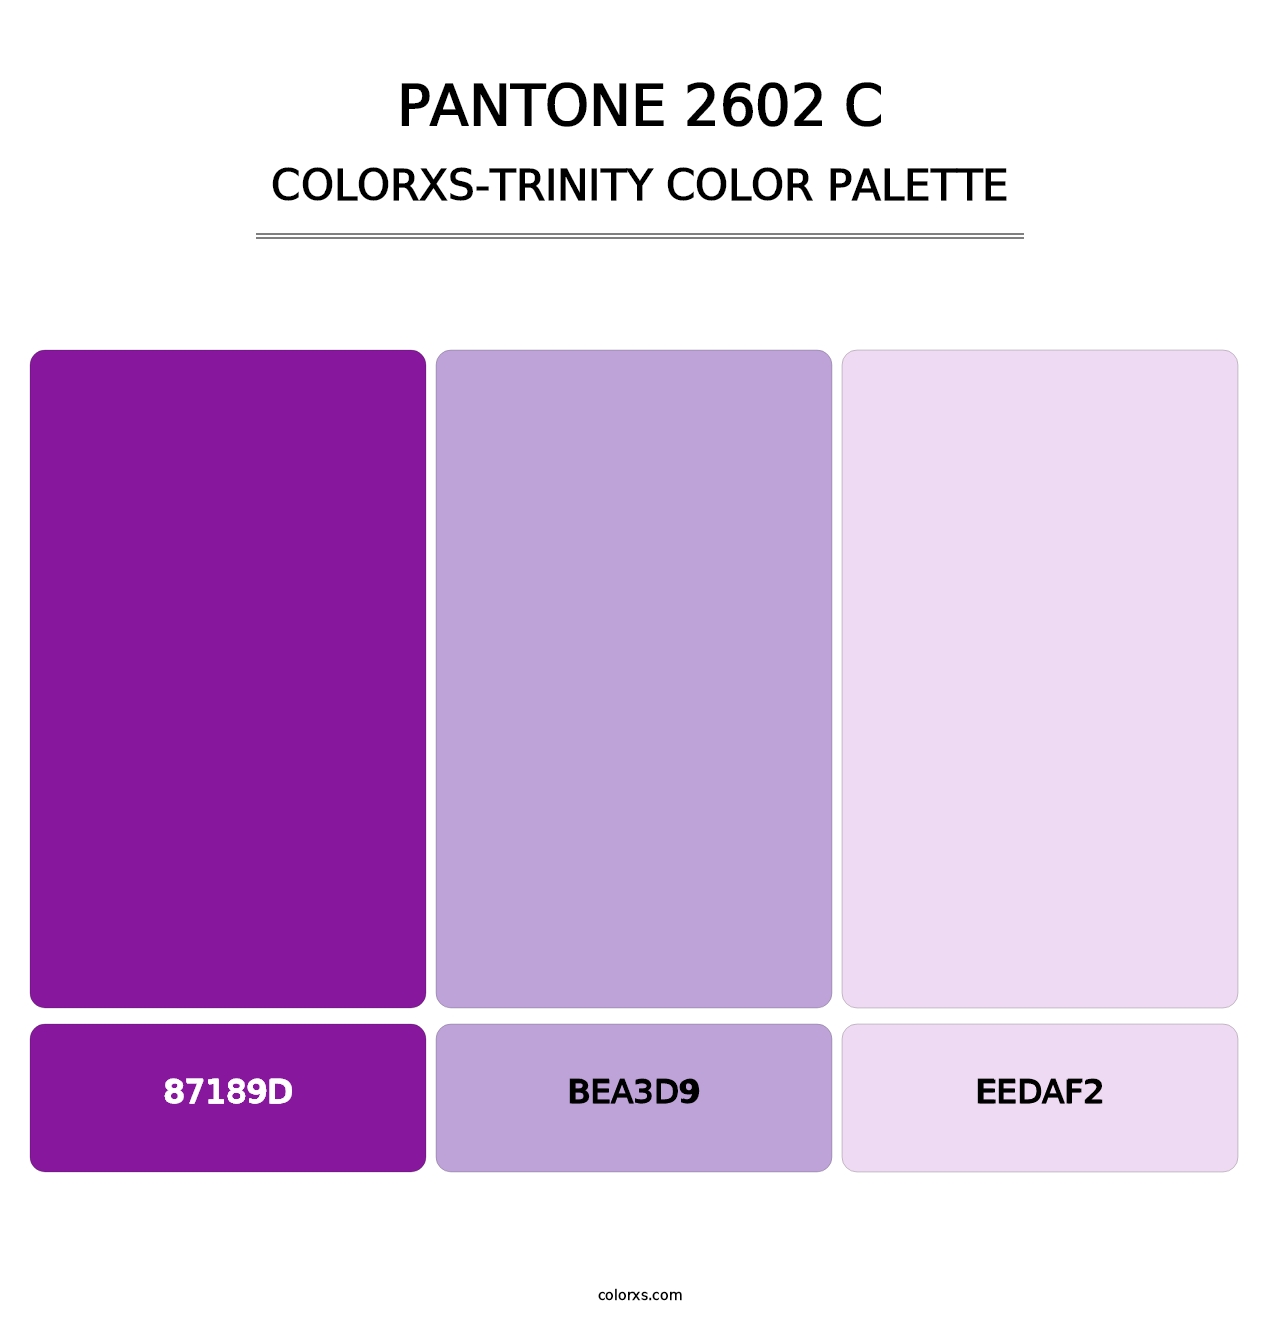 PANTONE 2602 C - Colorxs Trinity Palette